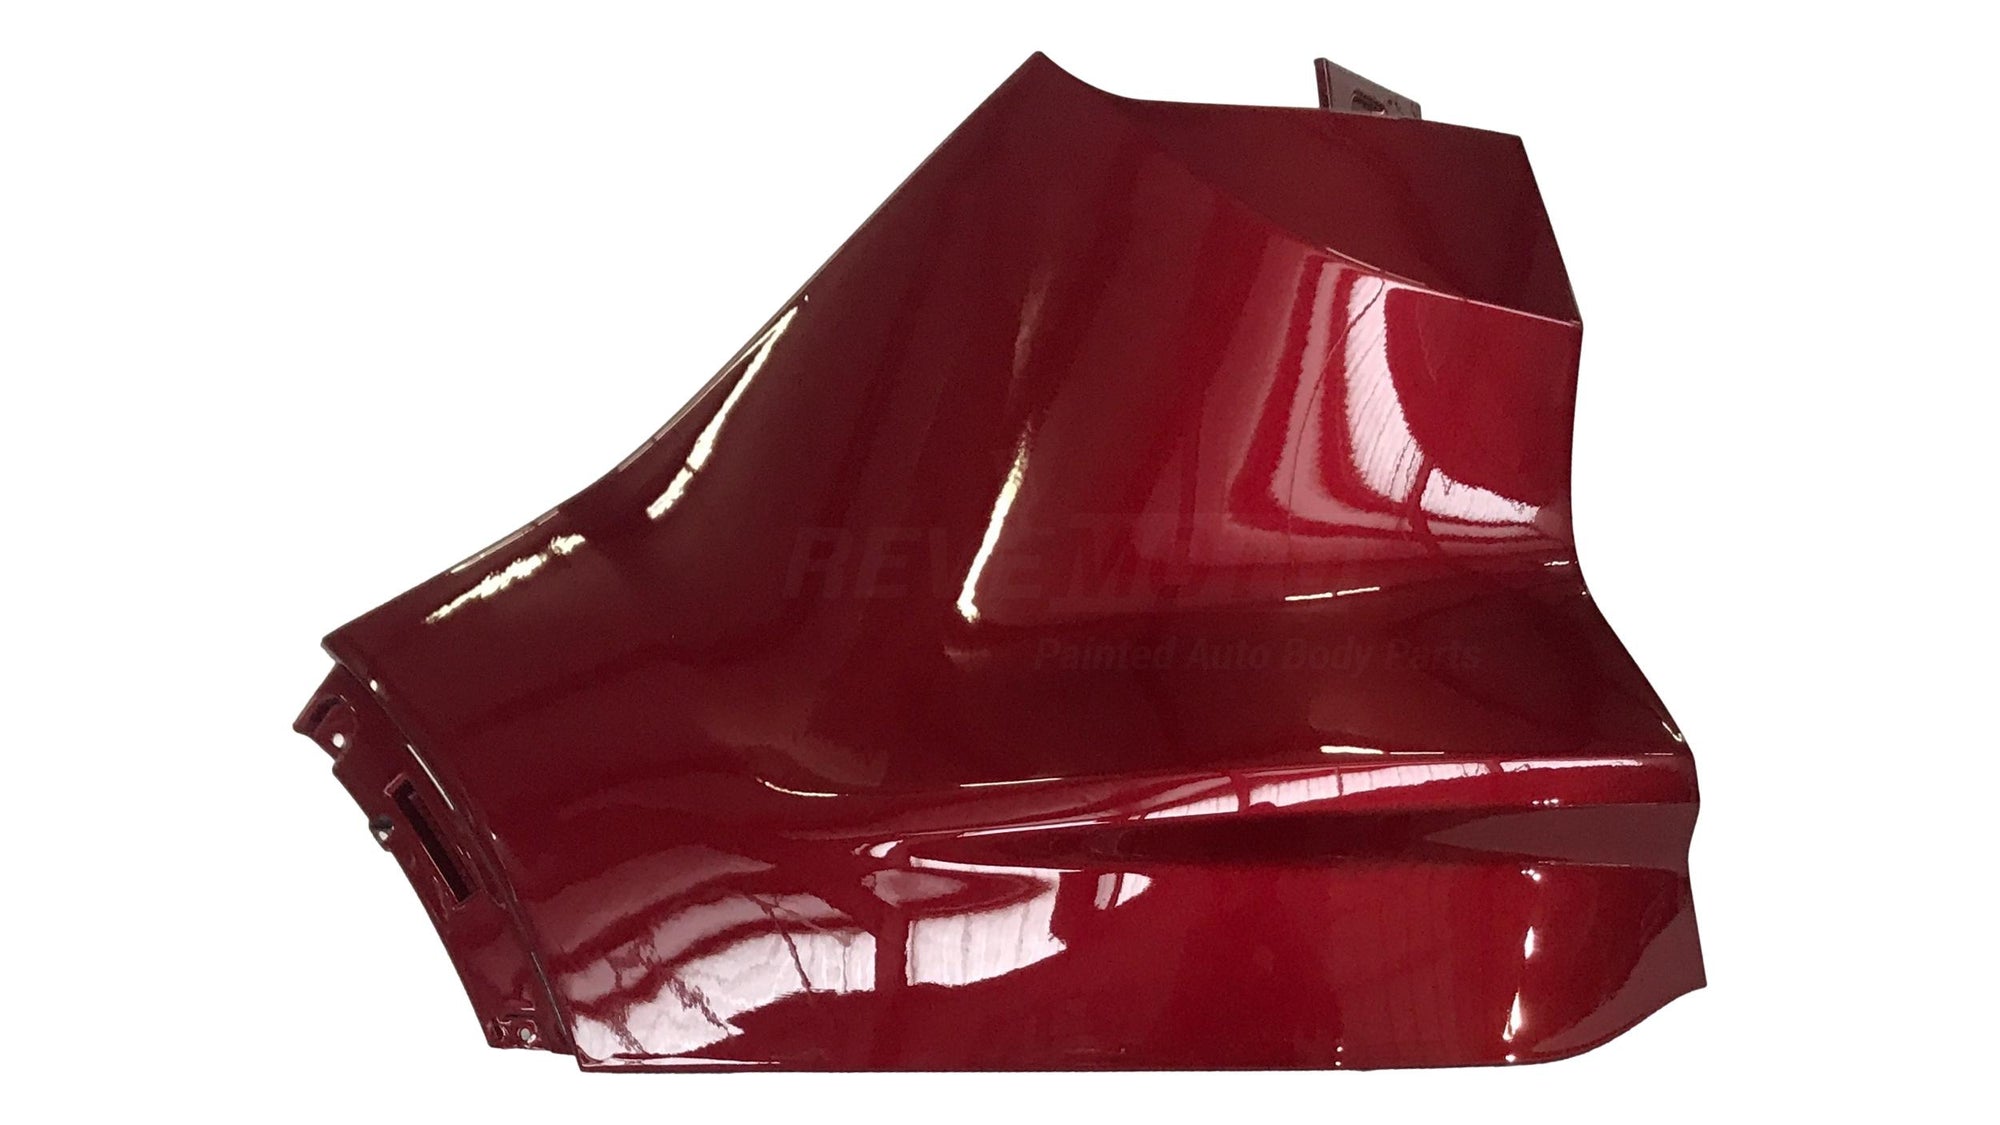 19587 2017-2019 Ford Escape Rear Bumper End Cap Extension Painted Ruby Red Metallic (RR) Left, Driver-Side GJ5Z17811APTM FO1116103